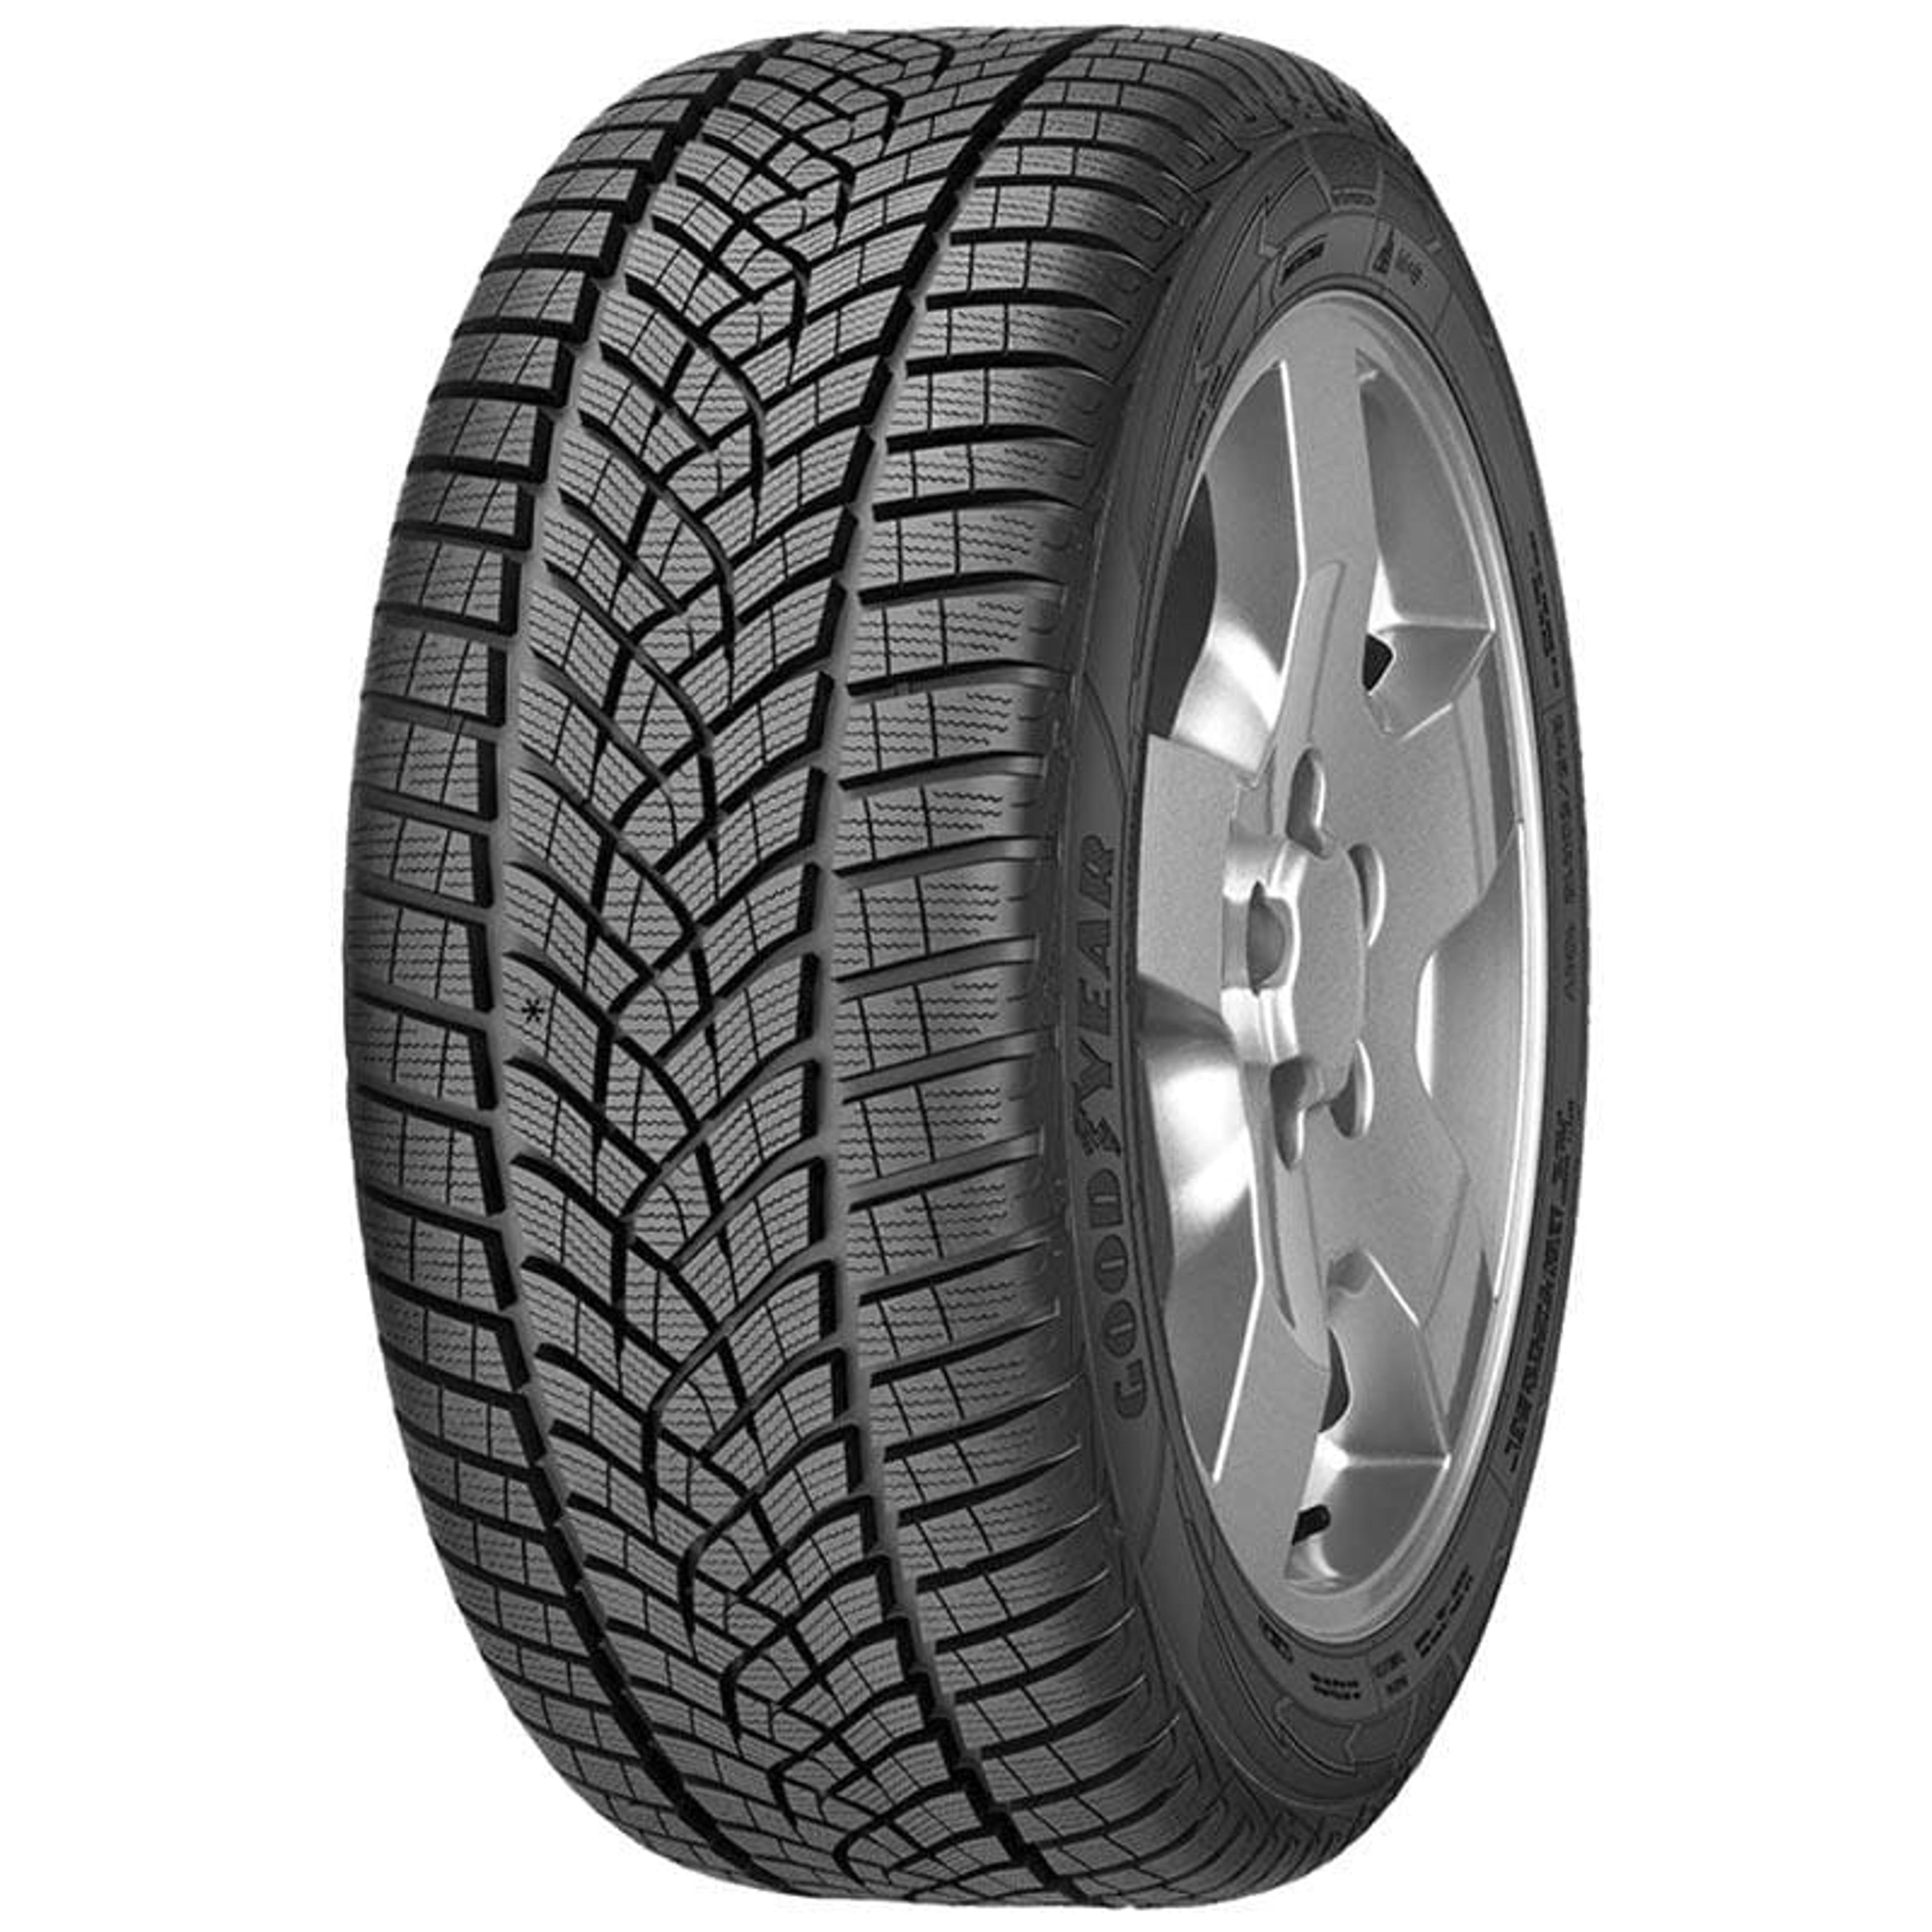 Buy Goodyear Ultra Grip Performance Plus Tires Online | SimpleTire